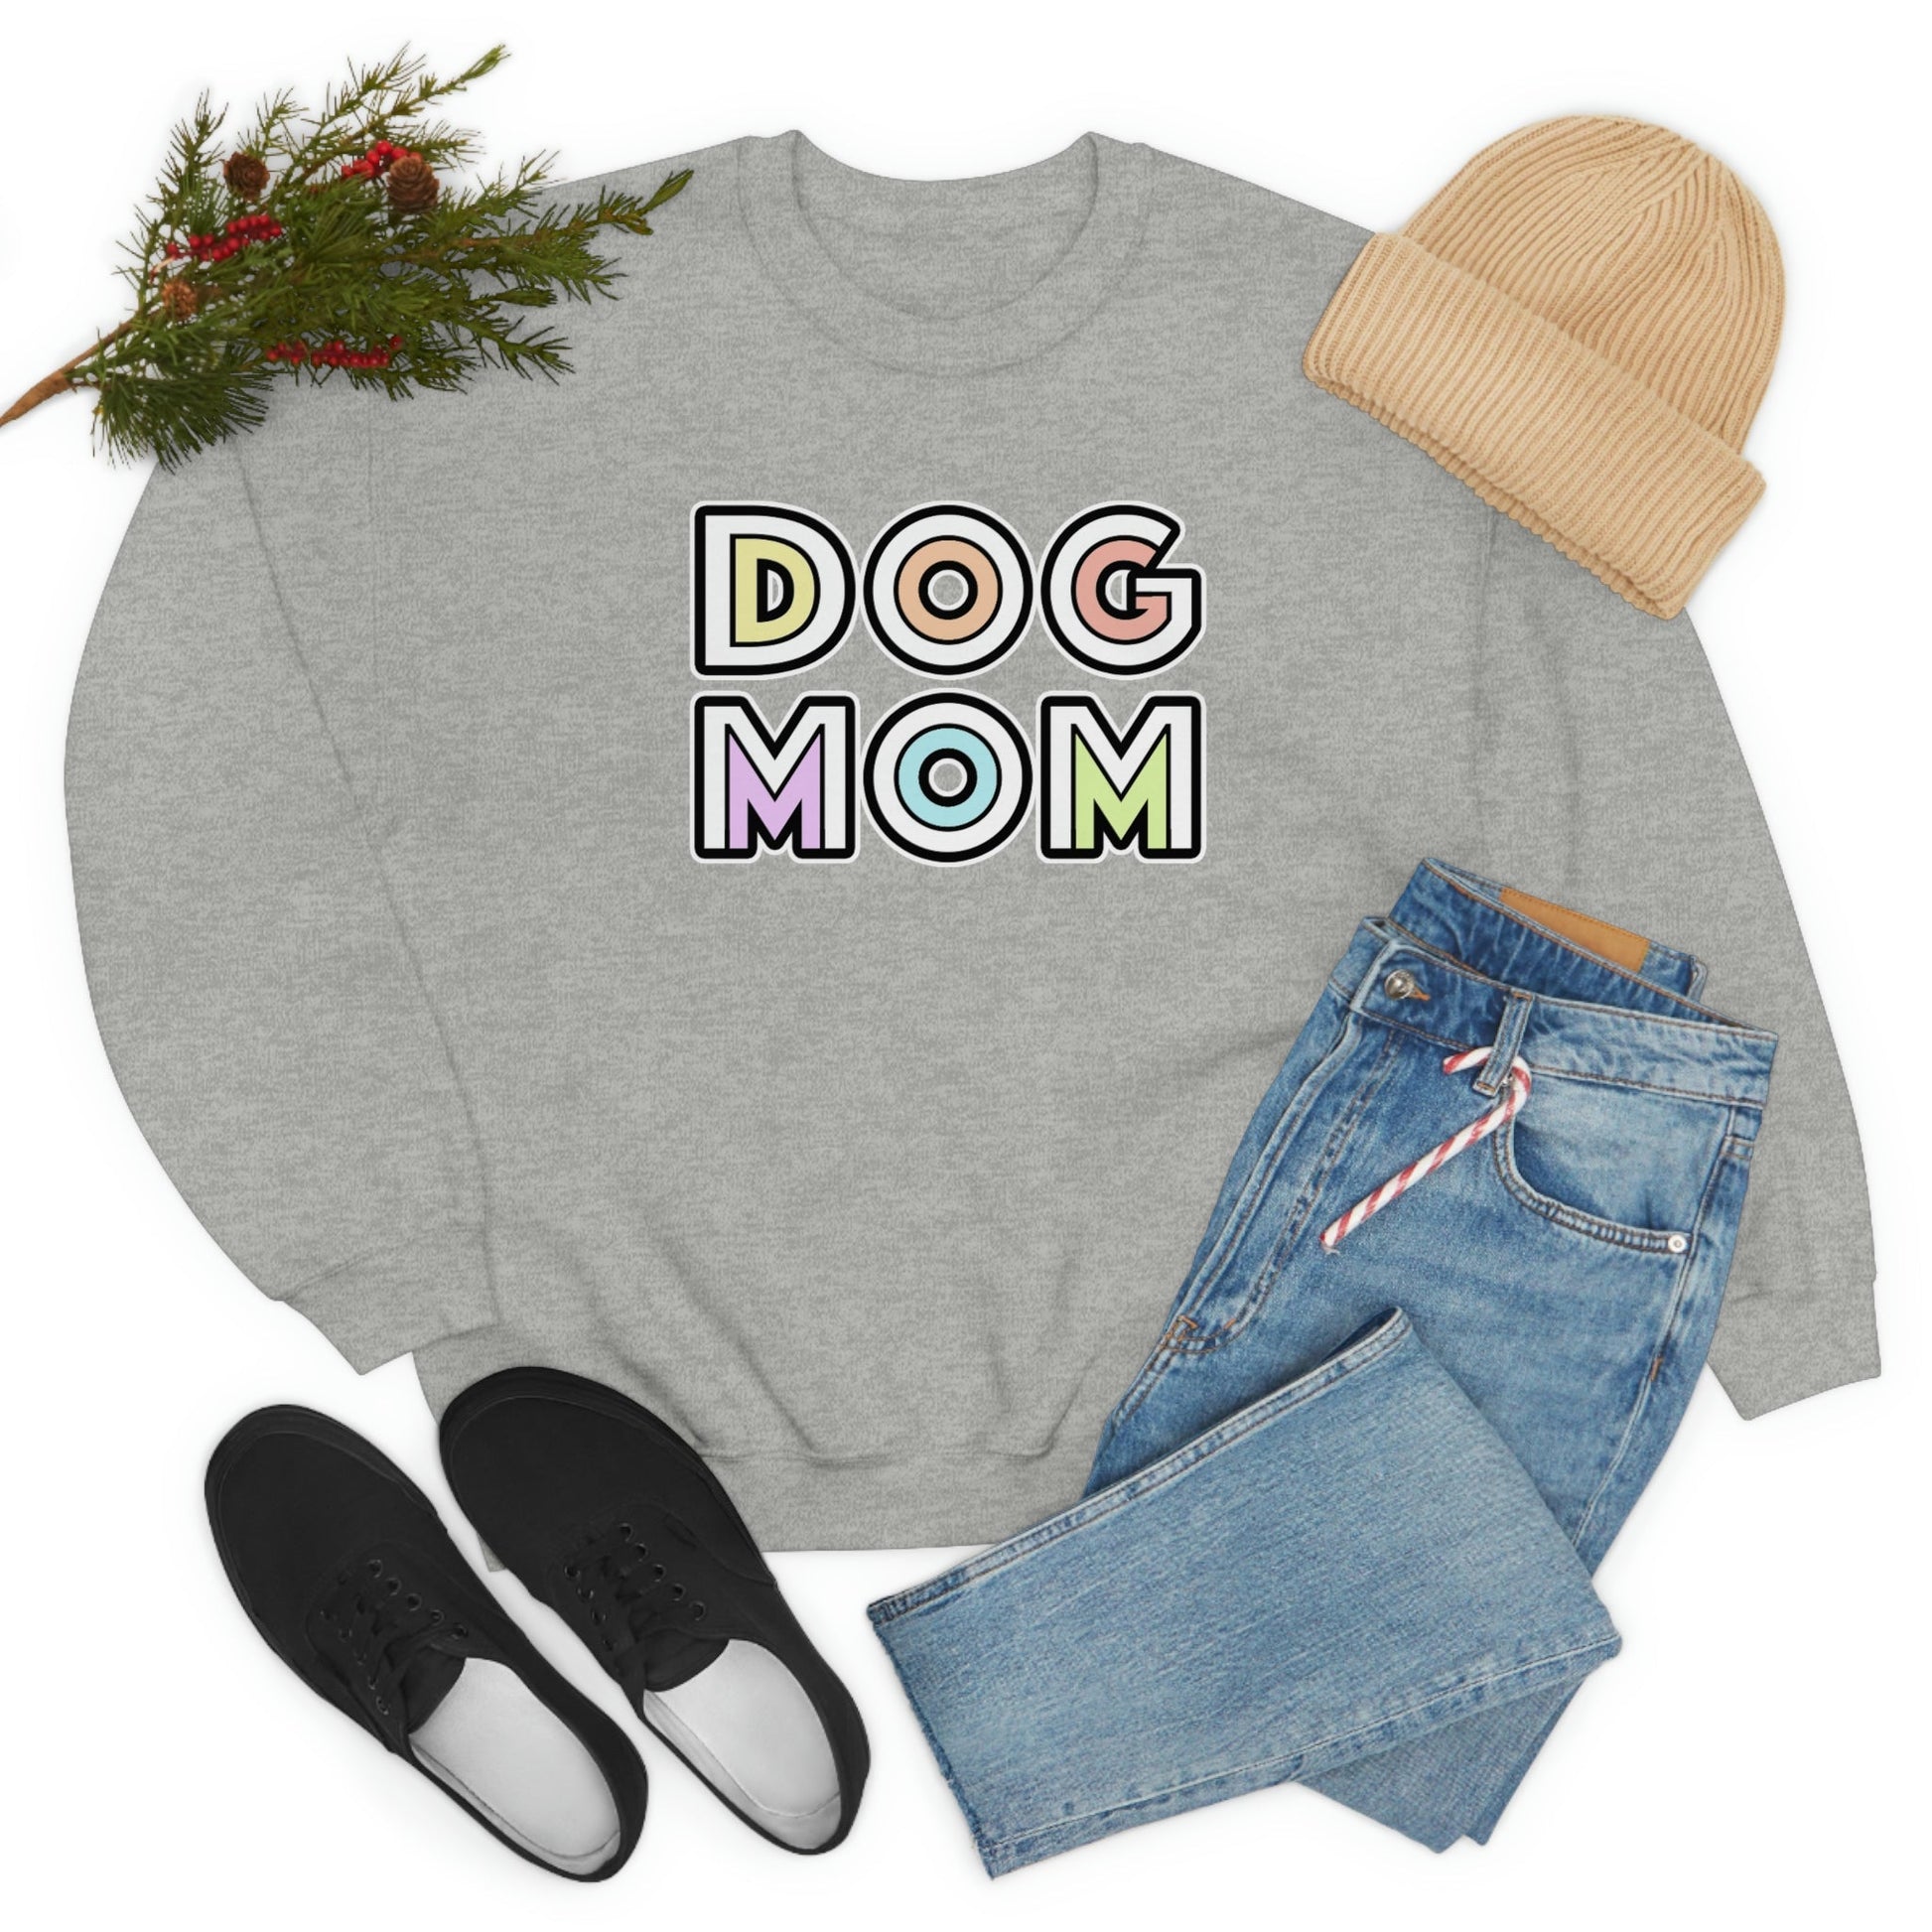 Dog Mom Retro | Crewneck Sweatshirt - Detezi Designs-32857171540514547013